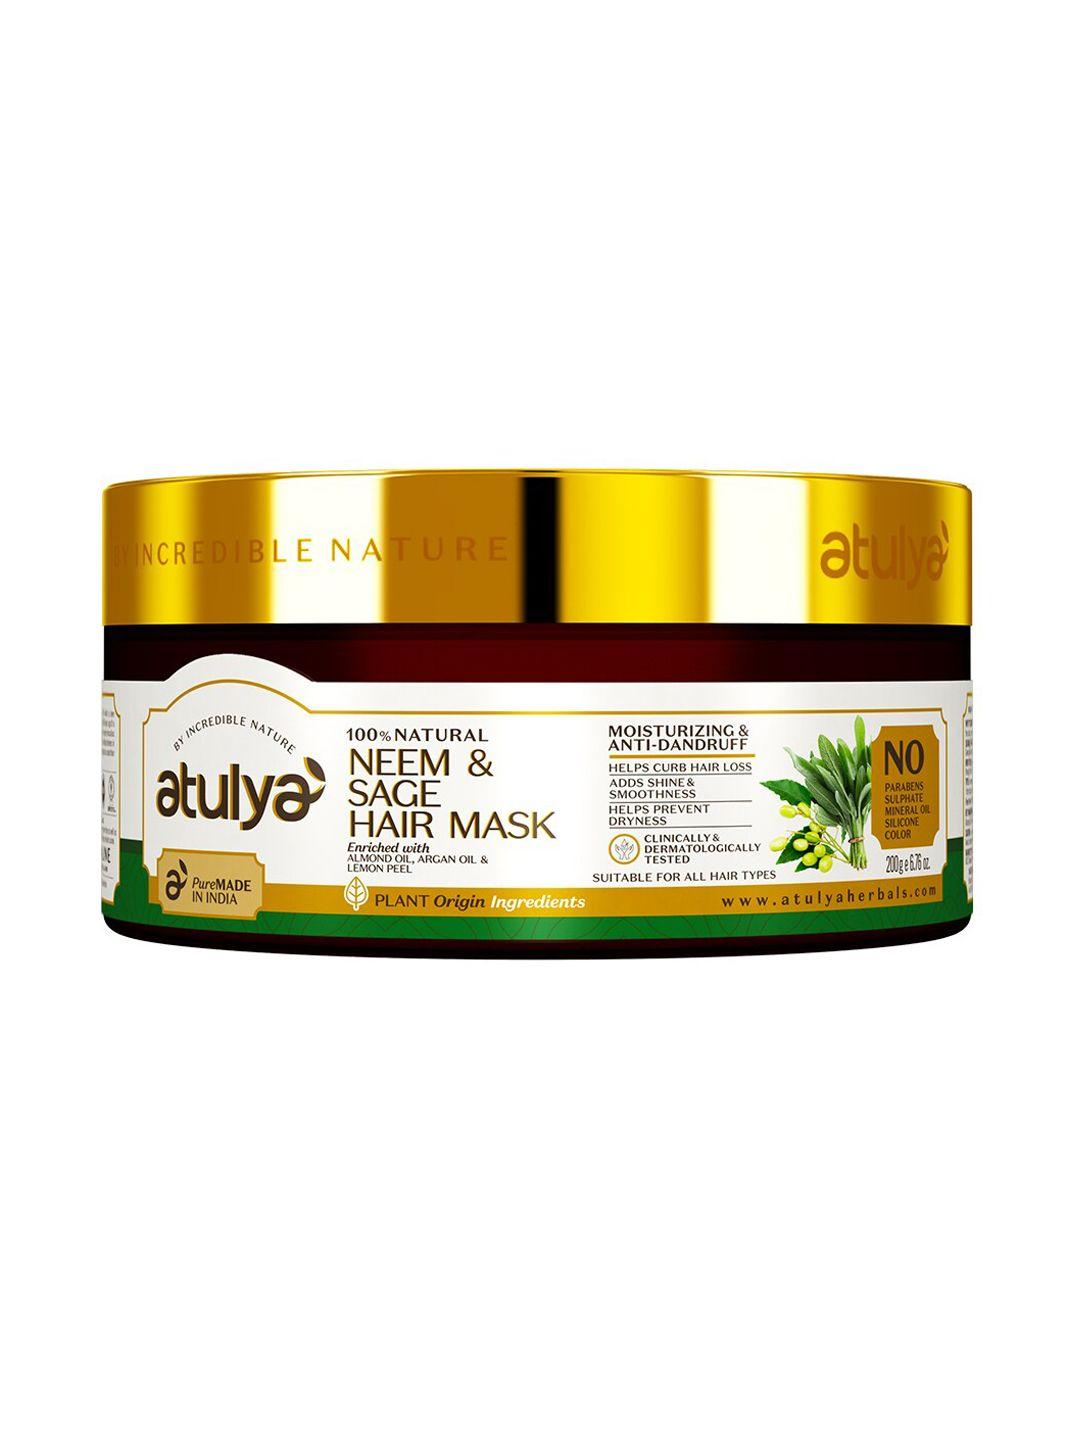 atulya natural neem & sage hair mask 200 g